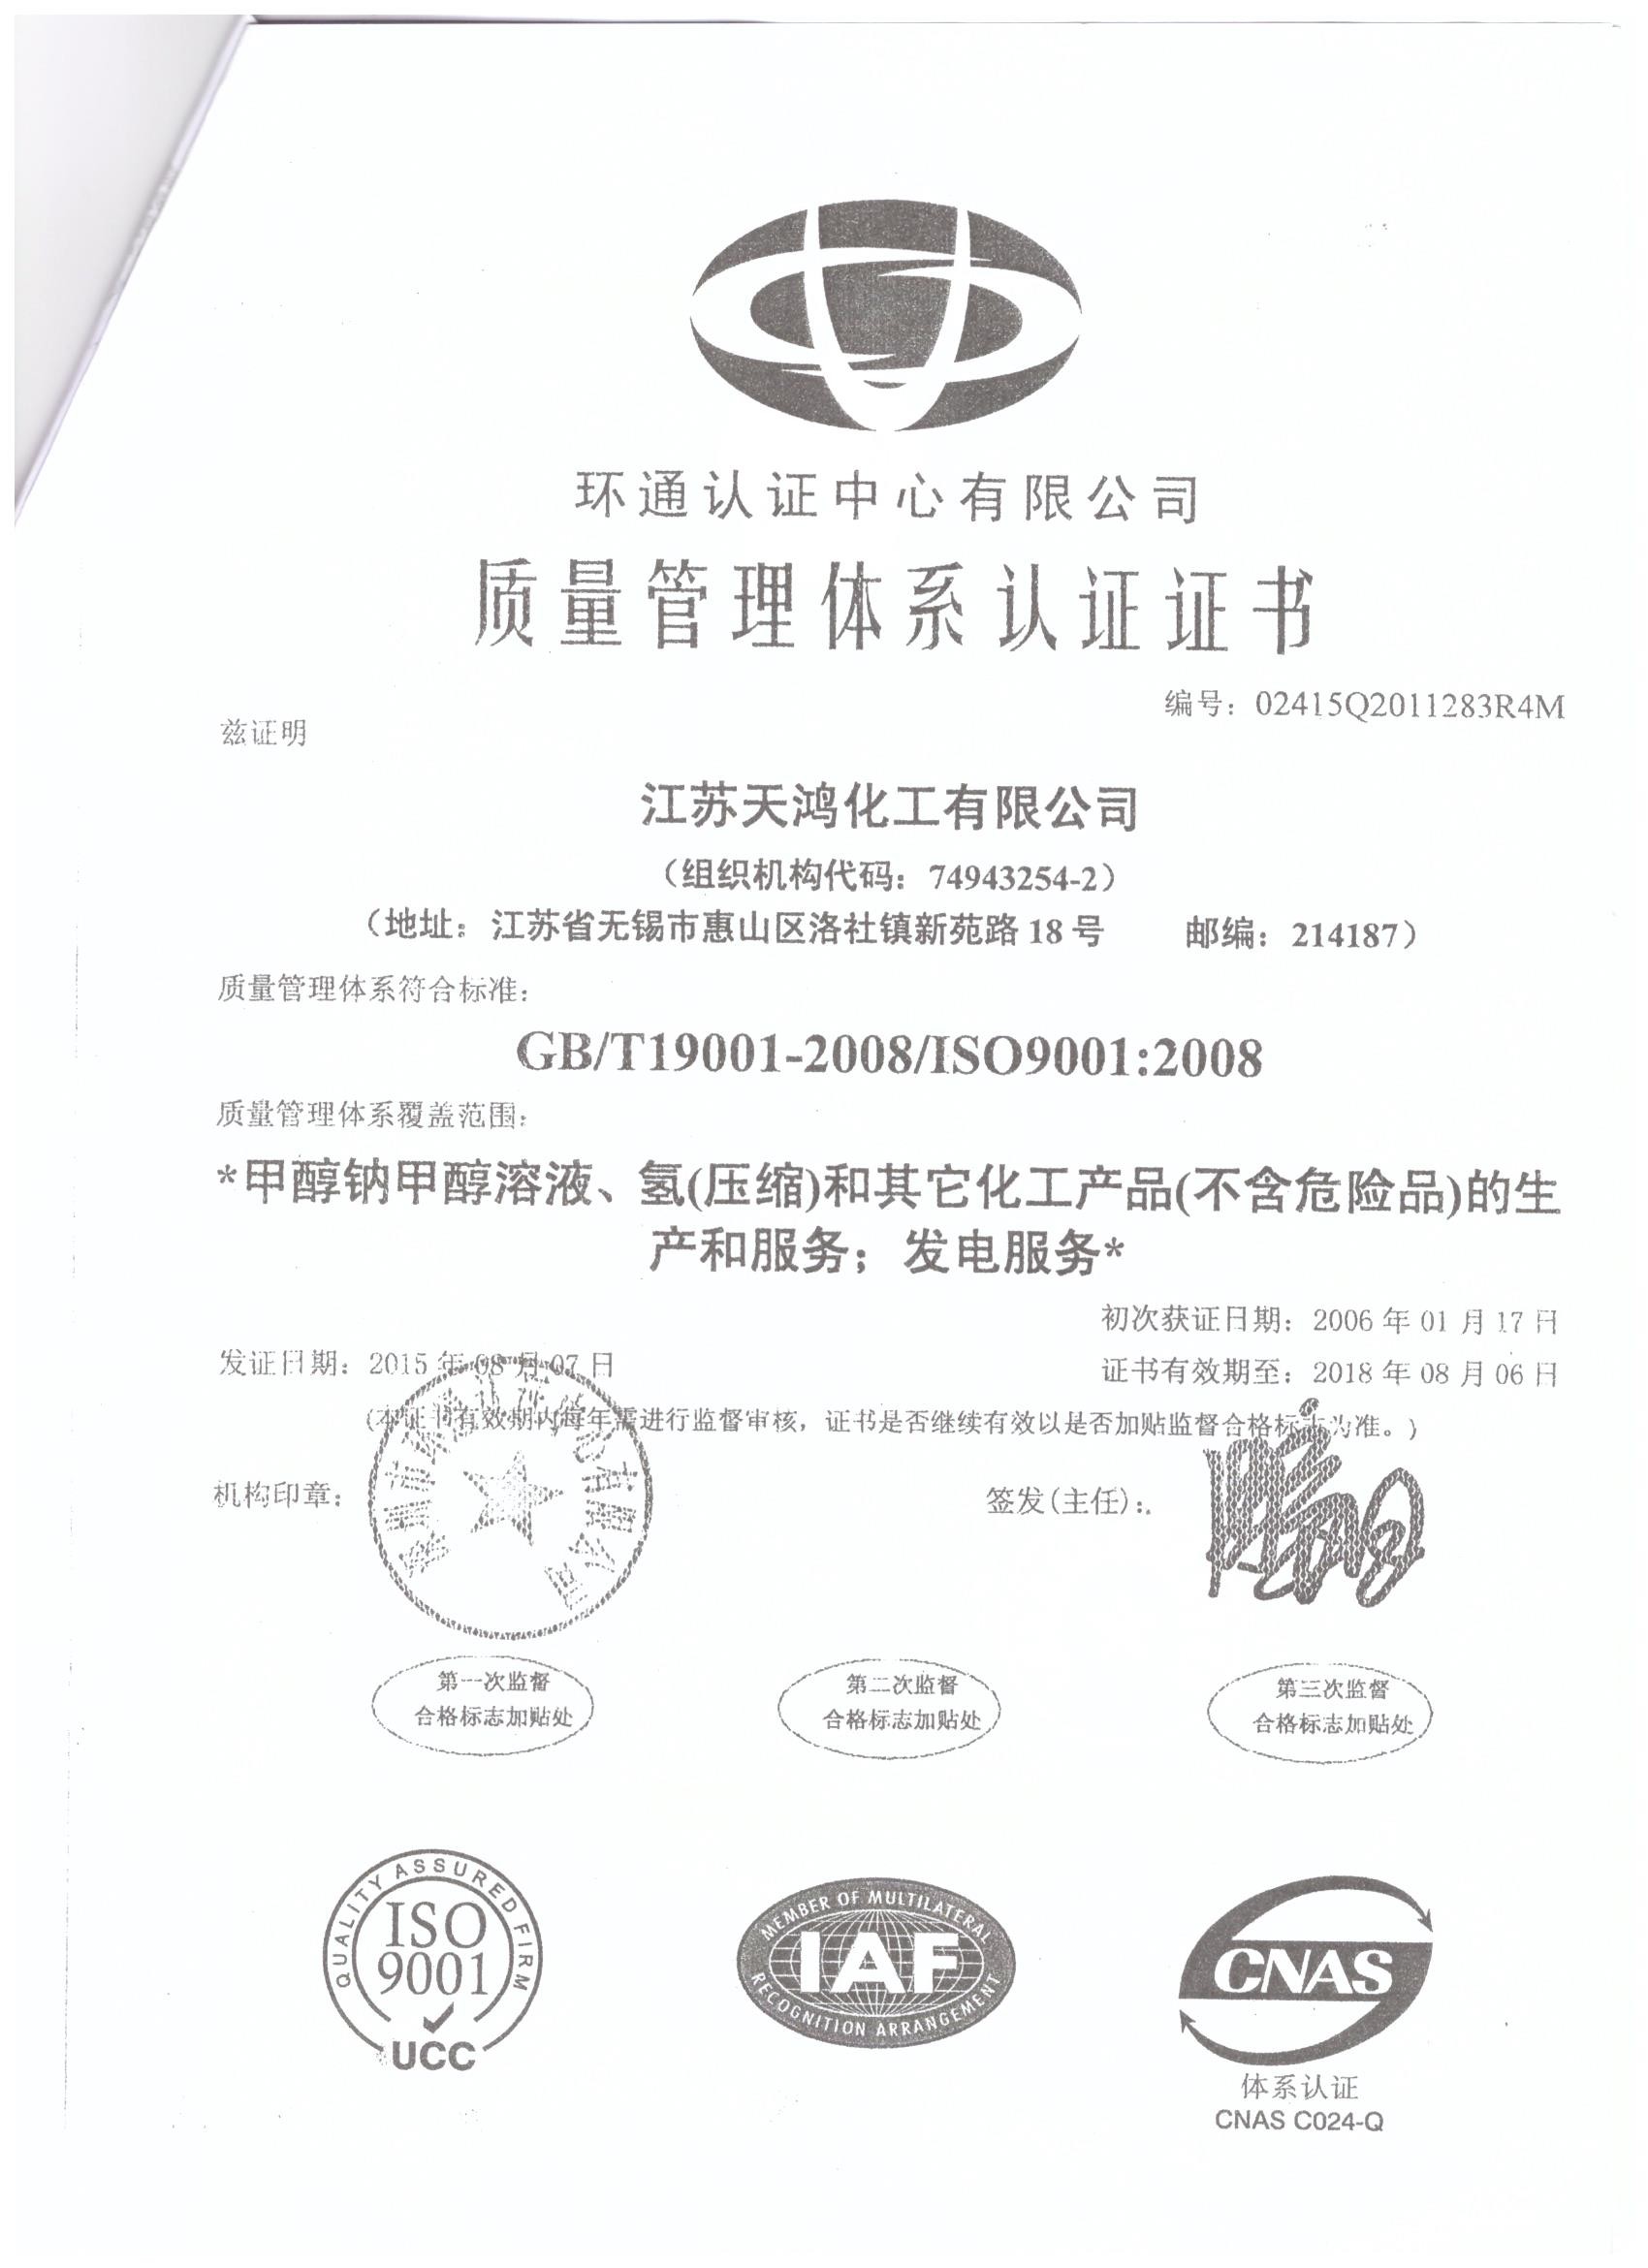 Wuxi Rocket Chemical Co.,Ltd Certifications